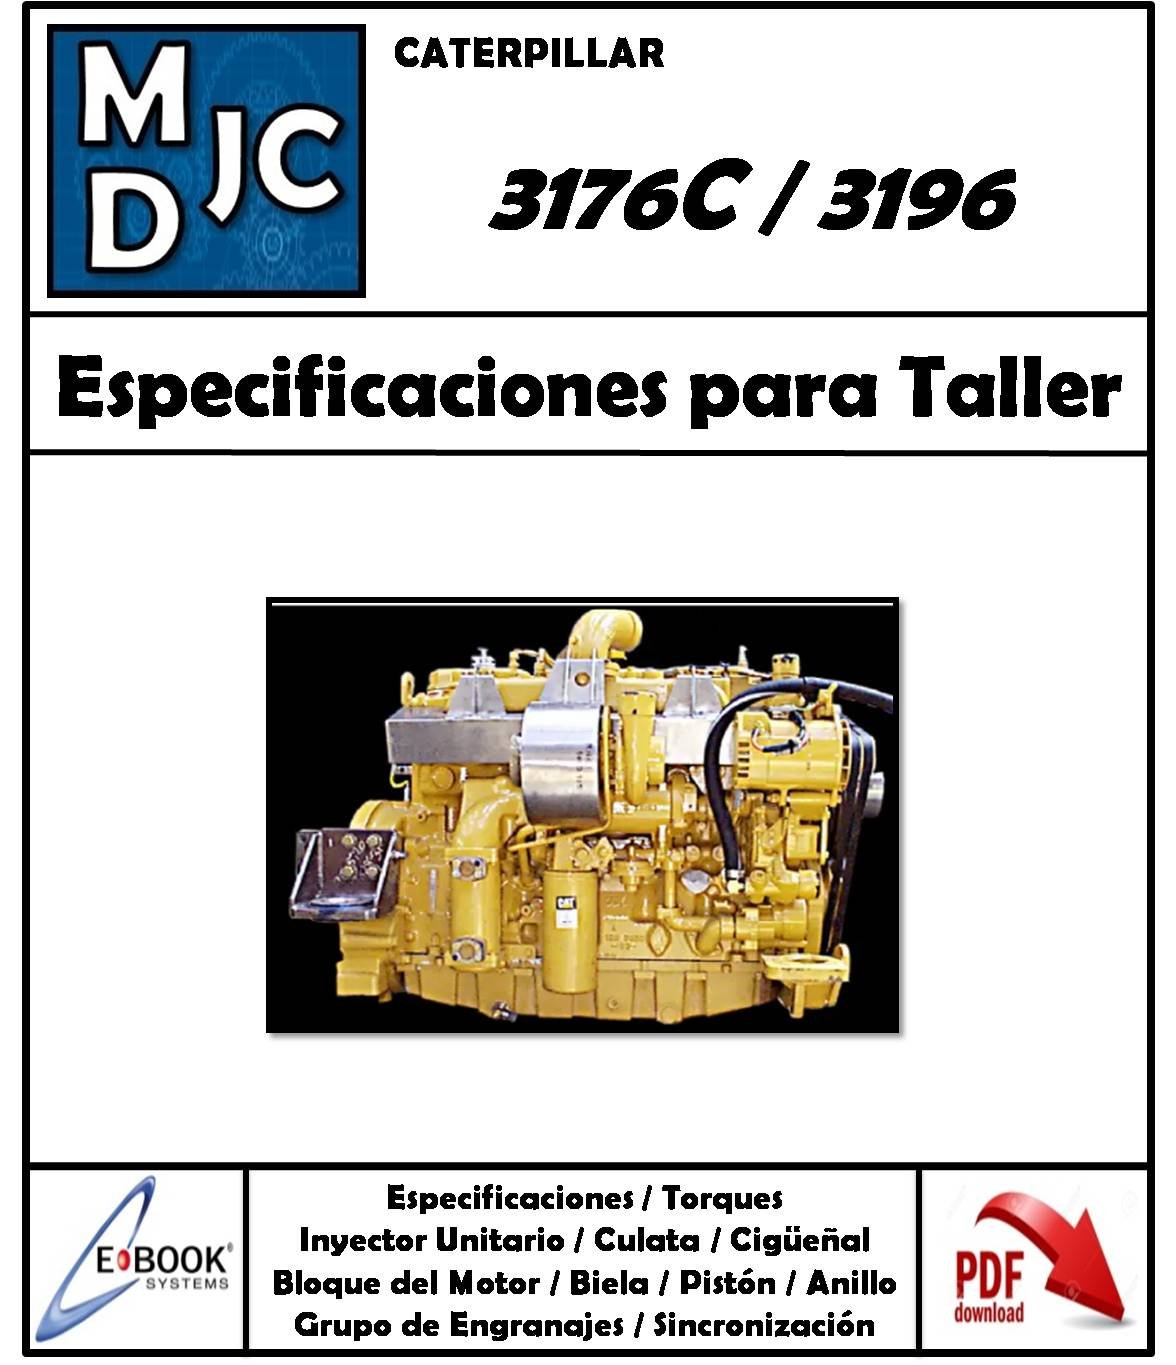 Manual de Especificaciones Técnicas para Taller Motor Caterpillar 3176C / 3196